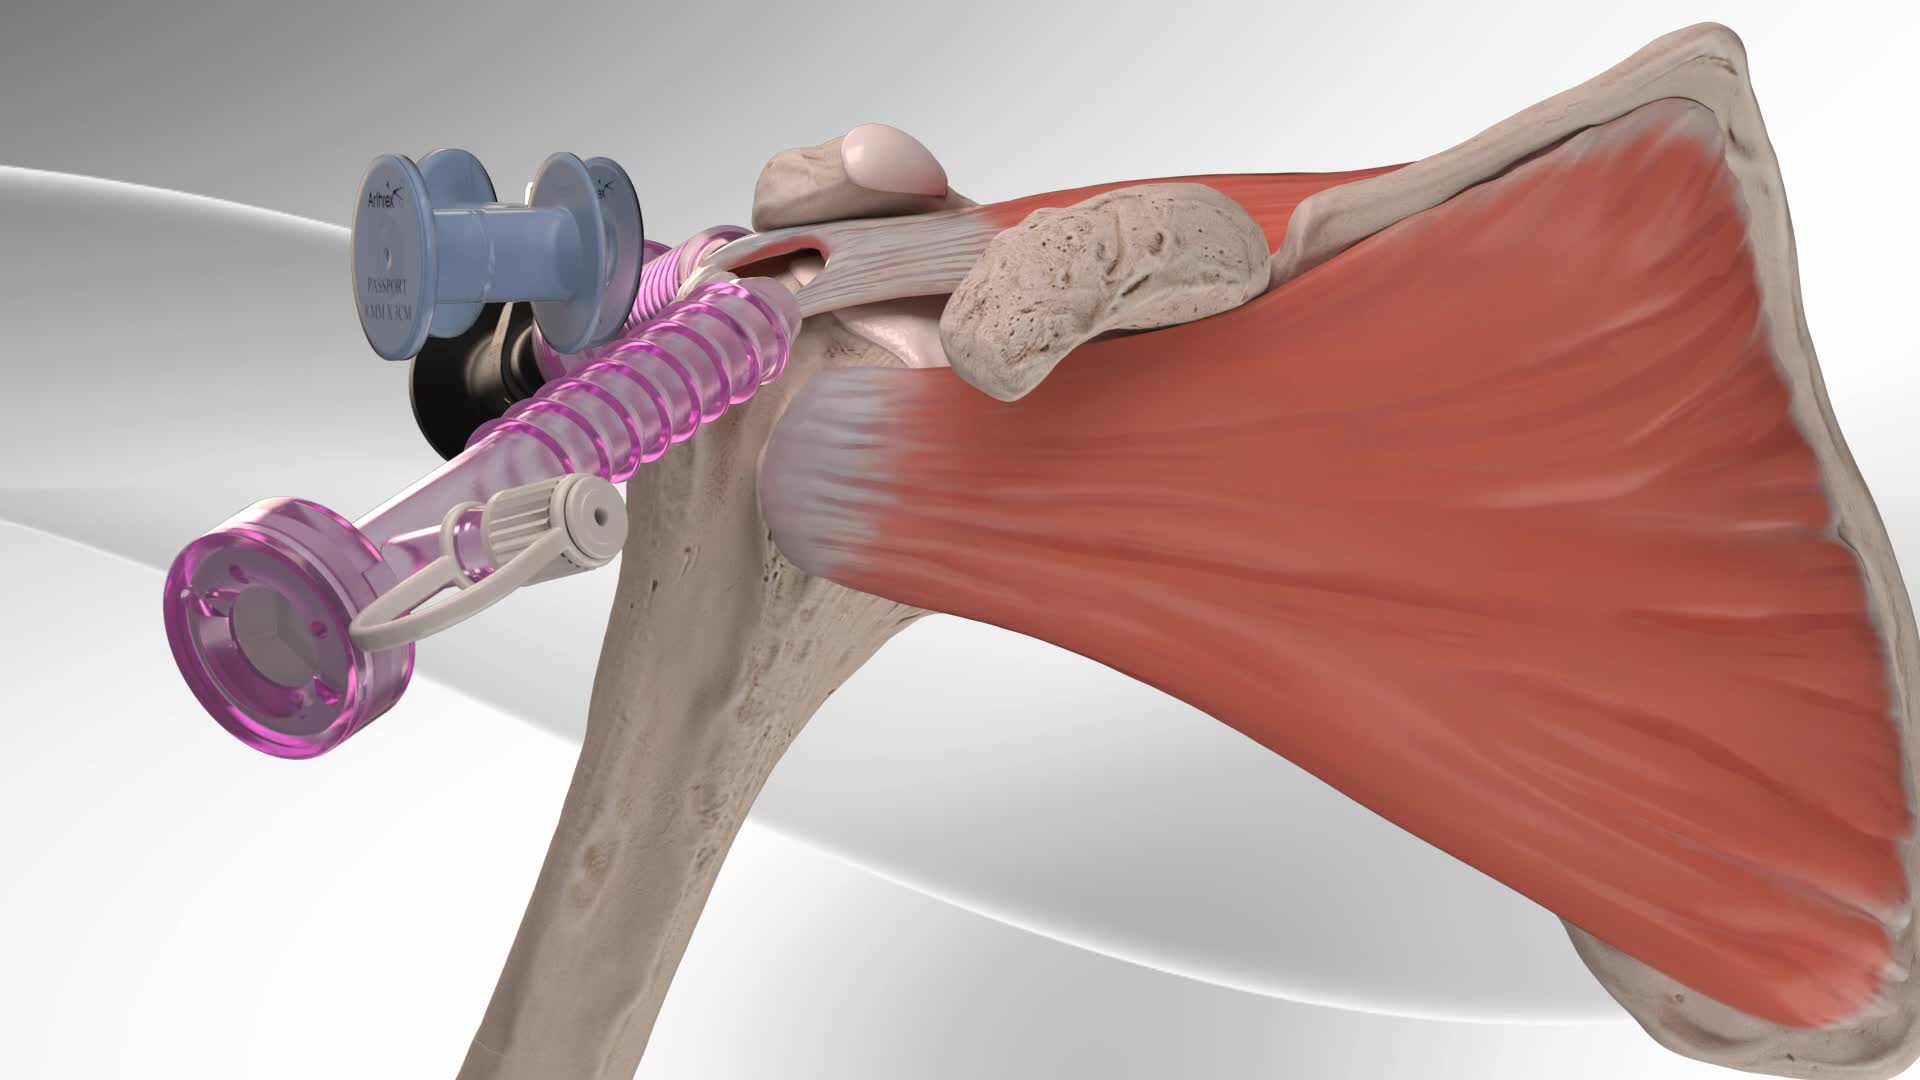 Shoulder arthroscopy: Arthroscopic rotator cuff repair using modified  Arthrex suture-bridge technique Surgical Technique - OrthOracle